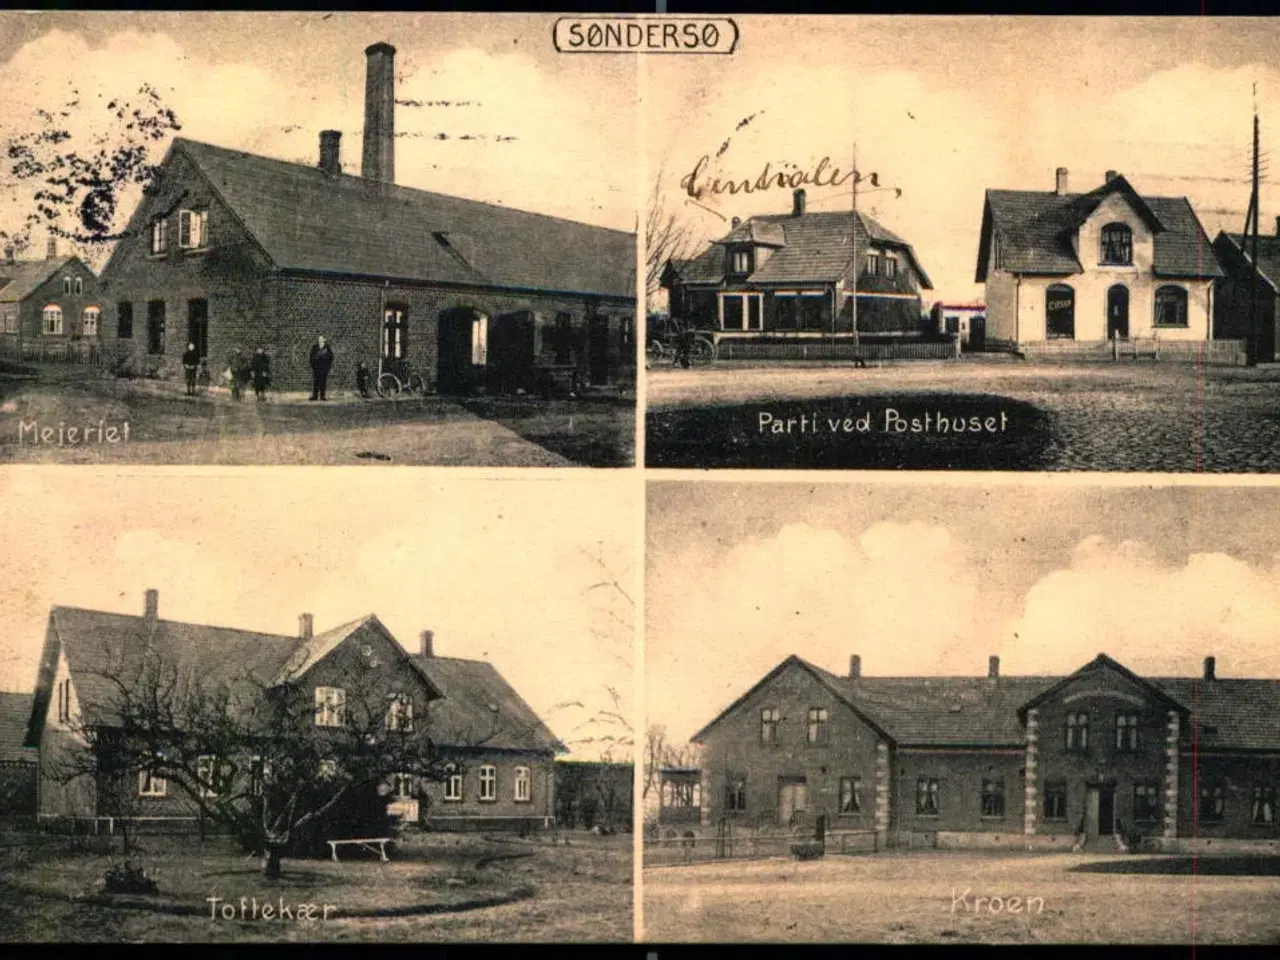 Billede 1 - Søndersø - Mejeriet - Posthuset - Toftekær - Kroen - H. Schmidt u/n - Brugt